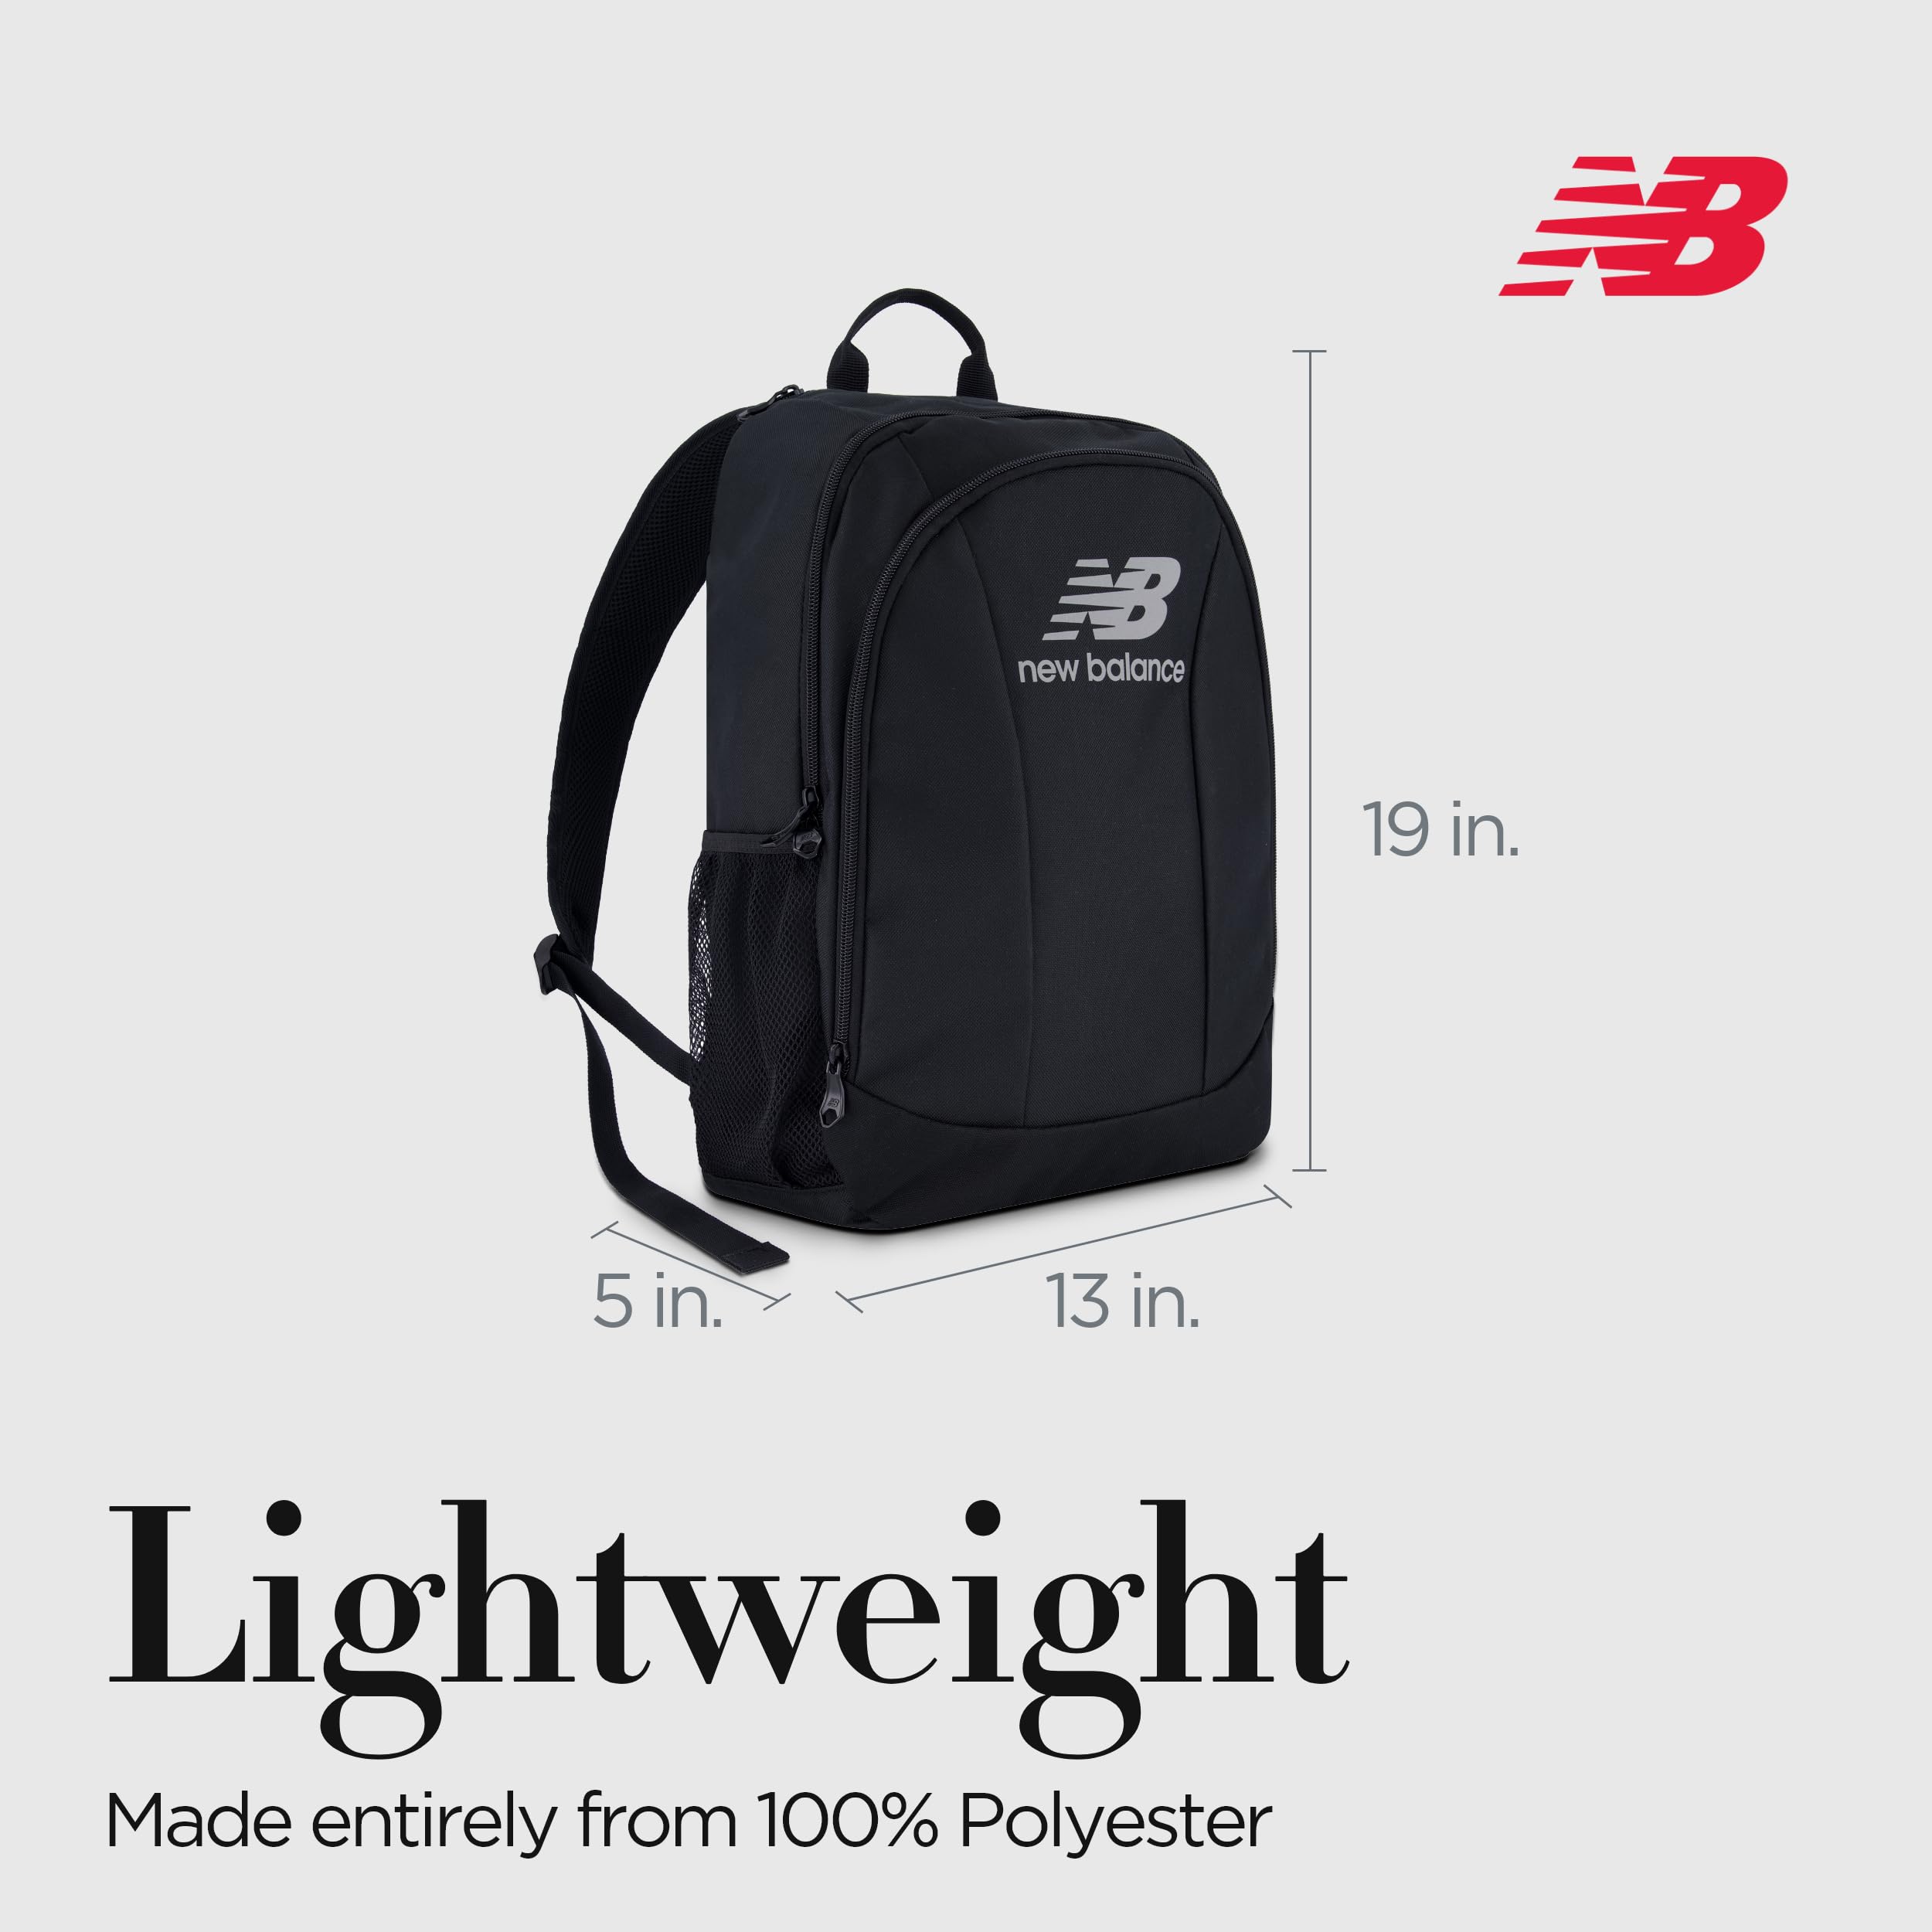 New Balance Laptop Backpack, Commuter Travel Bag for Men and Women, Black, 19 Inch